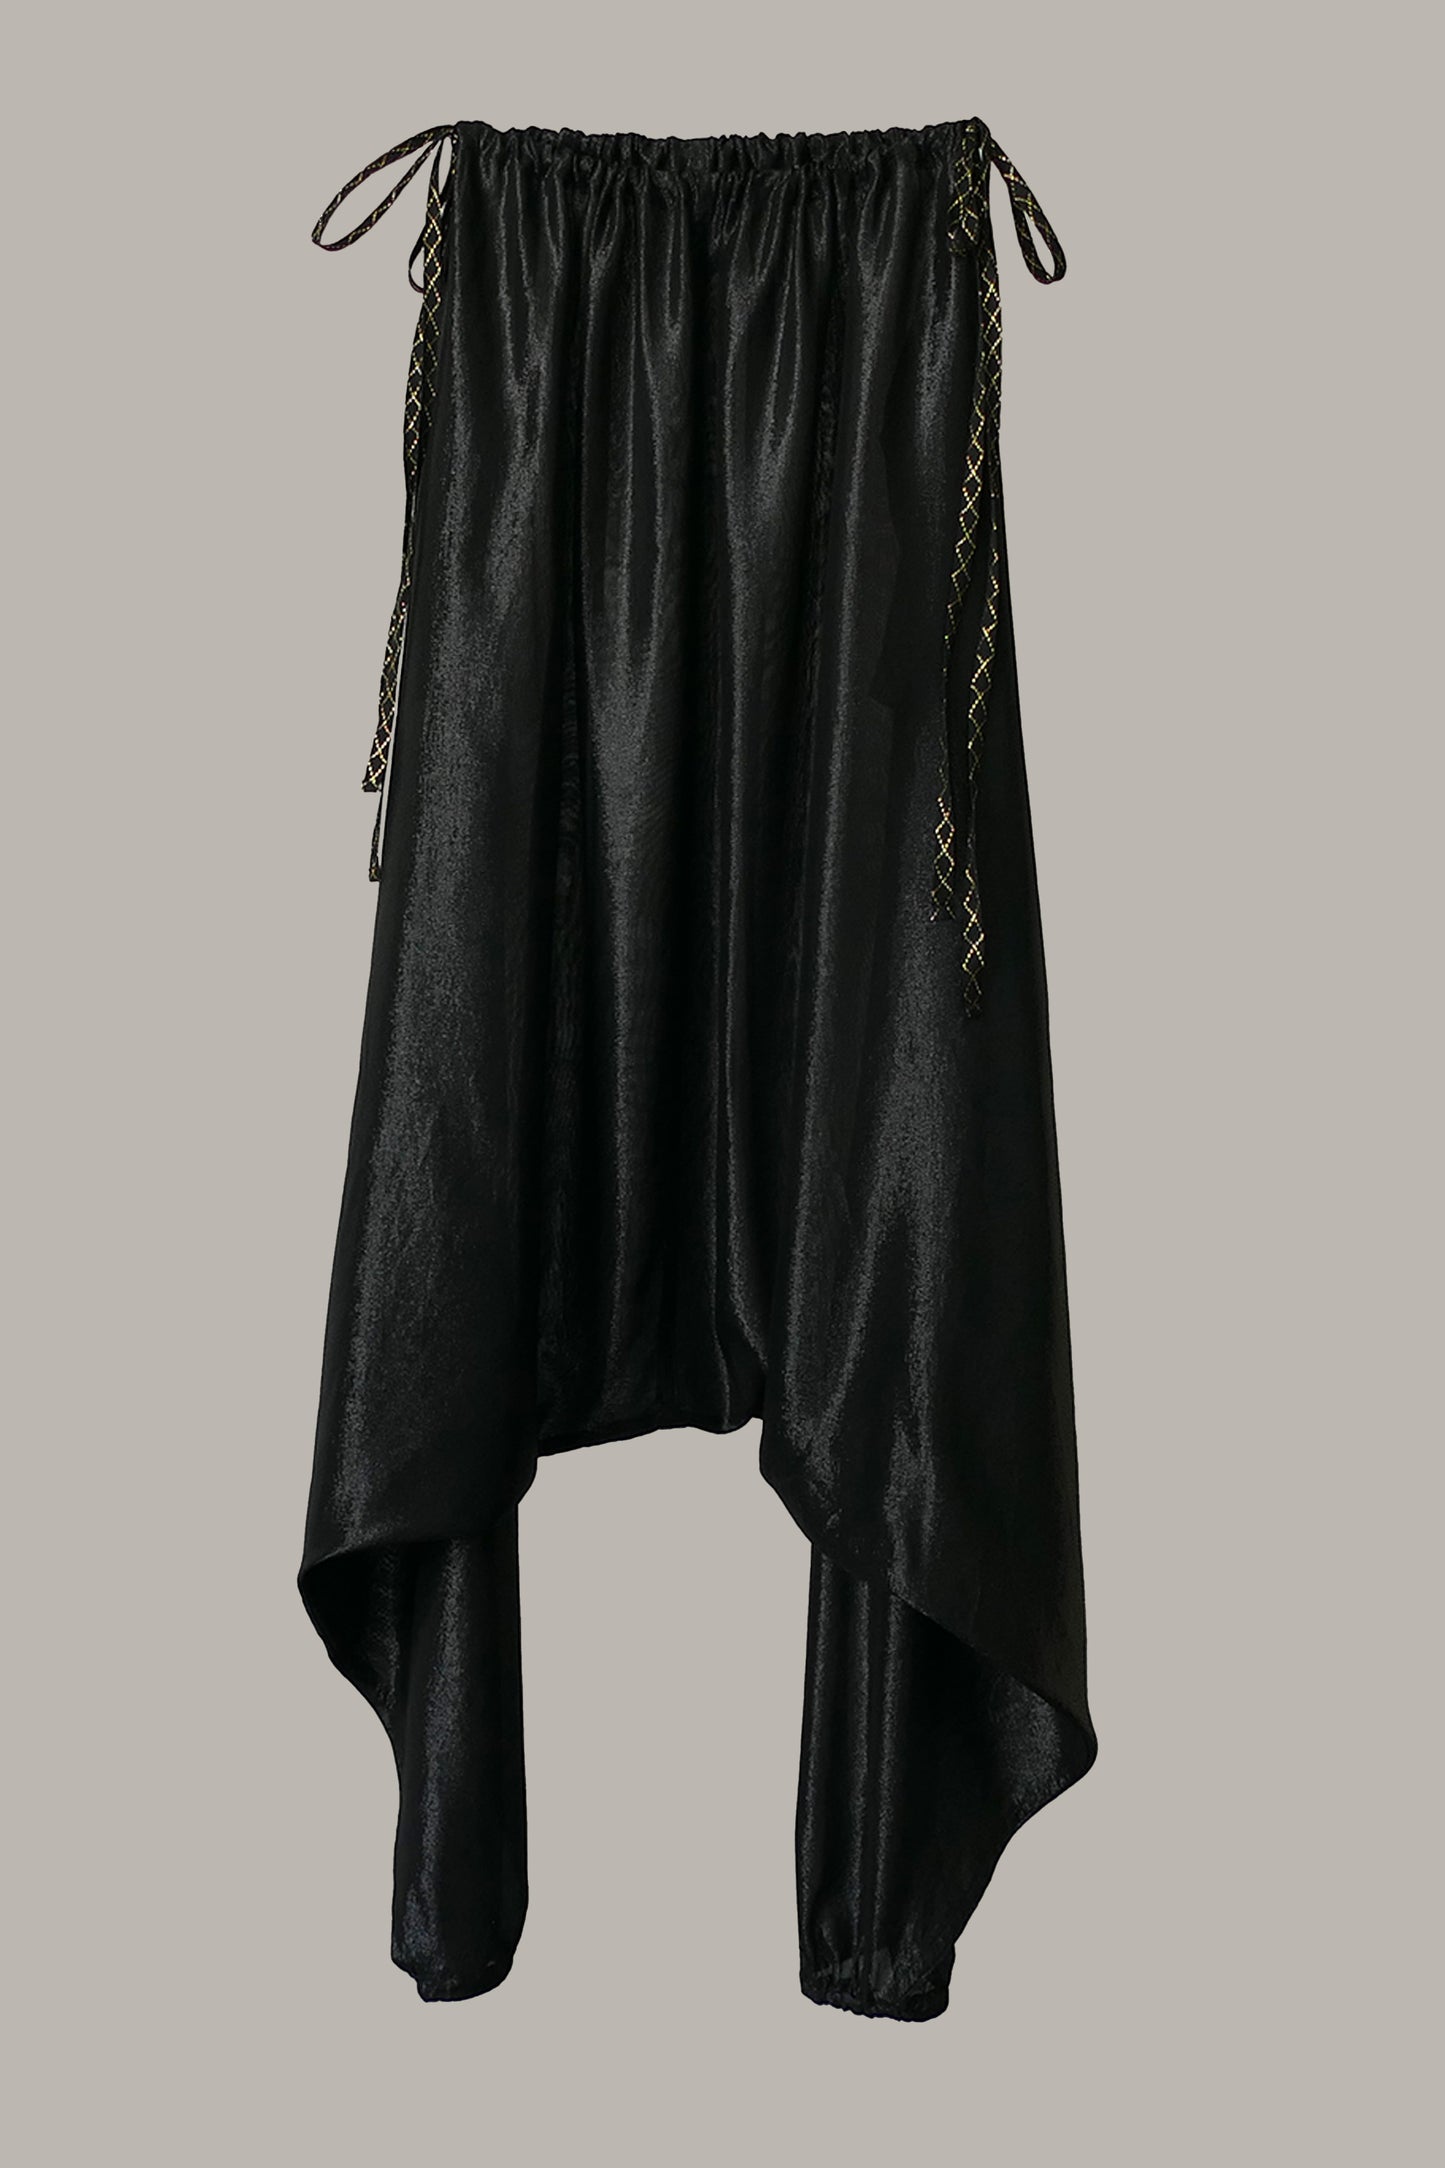 Alibaba Pants in Black Lapis Silk Lame’ {Made to Order}